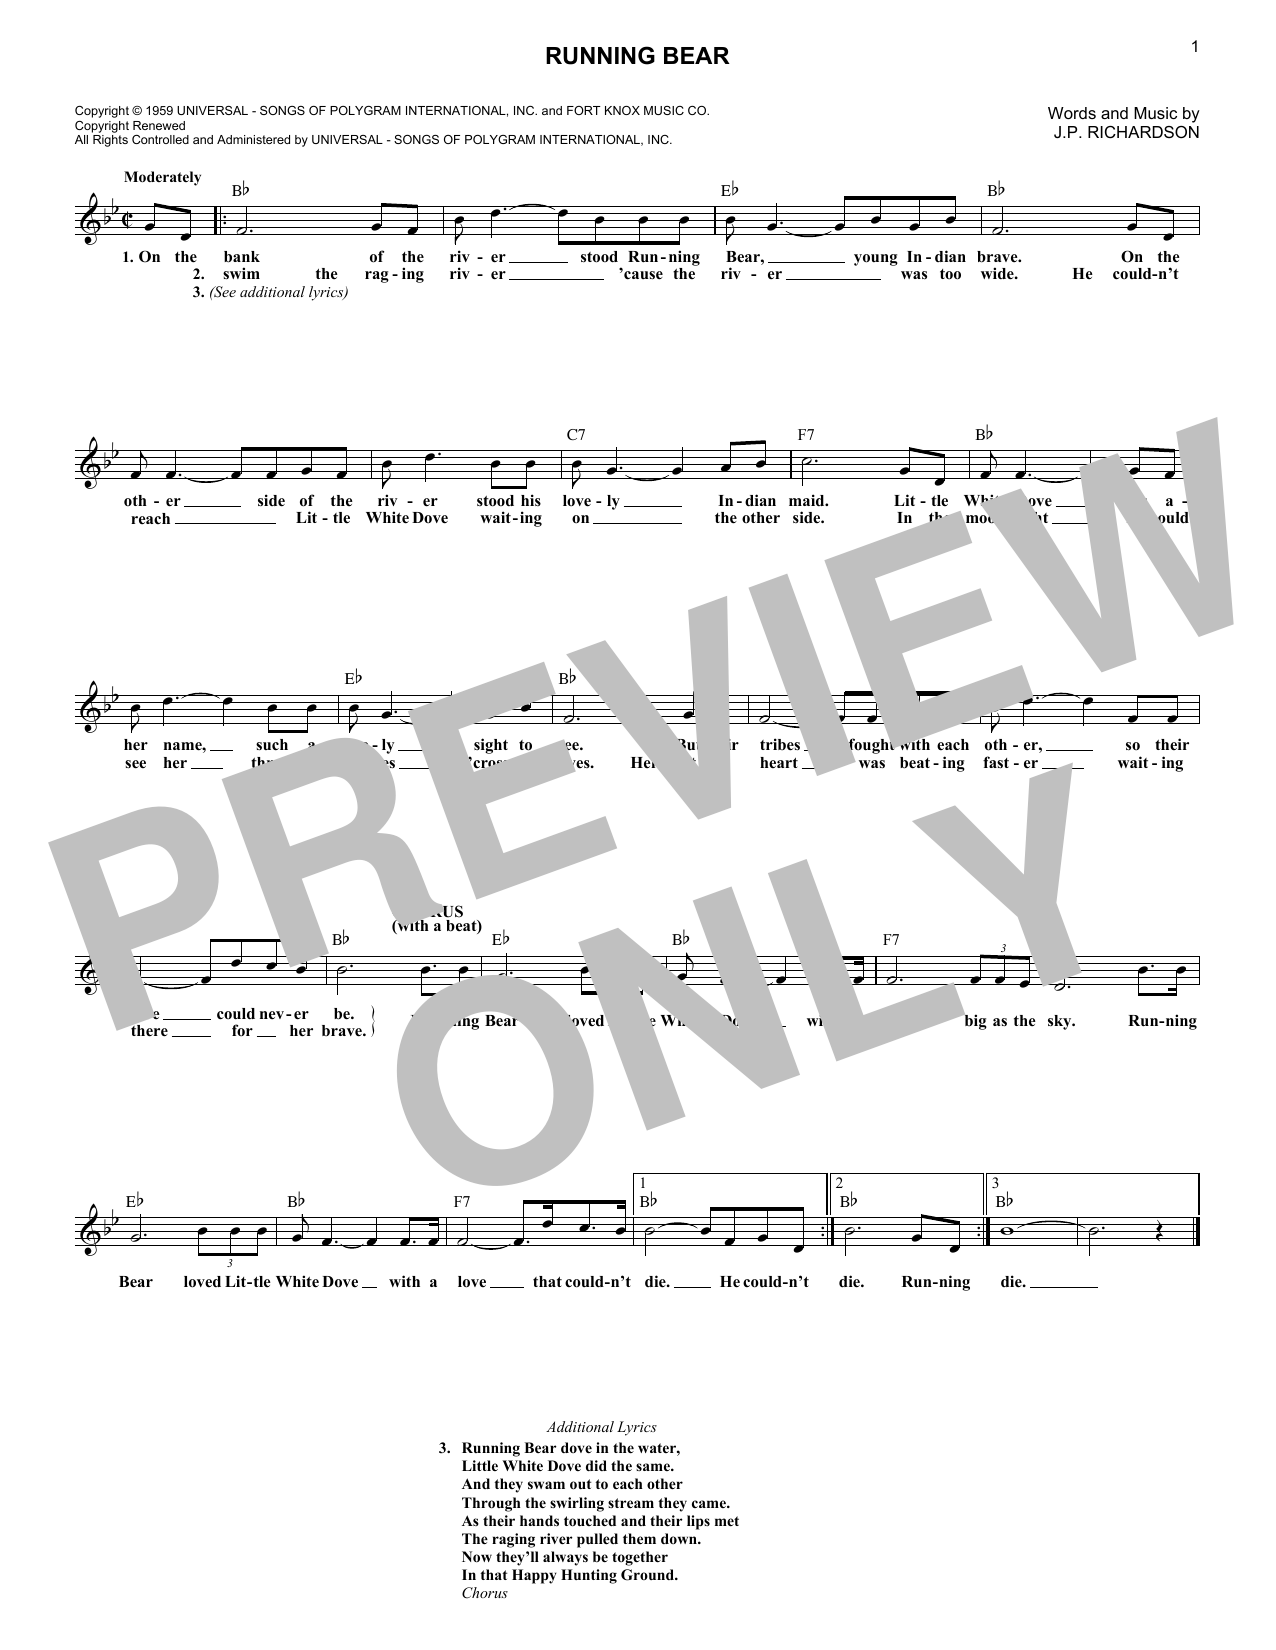 Johnny Preston Running Bear Sheet Music Notes & Chords for Melody Line, Lyrics & Chords - Download or Print PDF